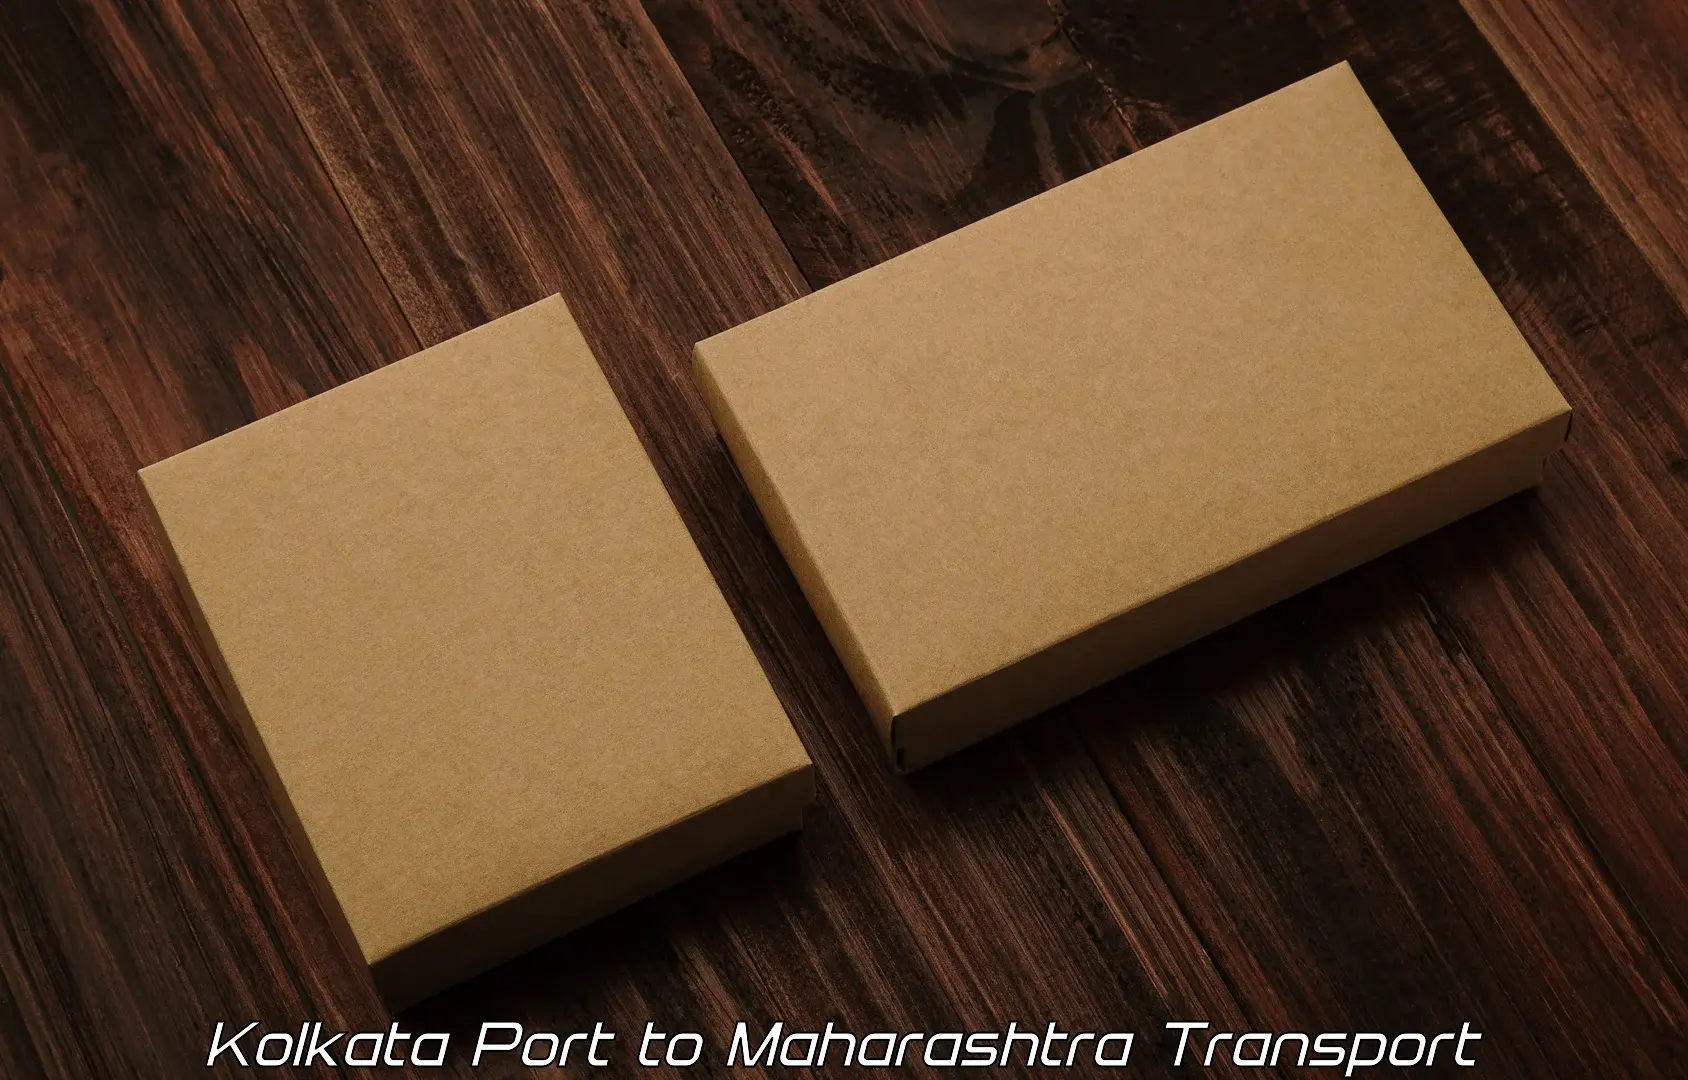 Road transport online services Kolkata Port to Oras